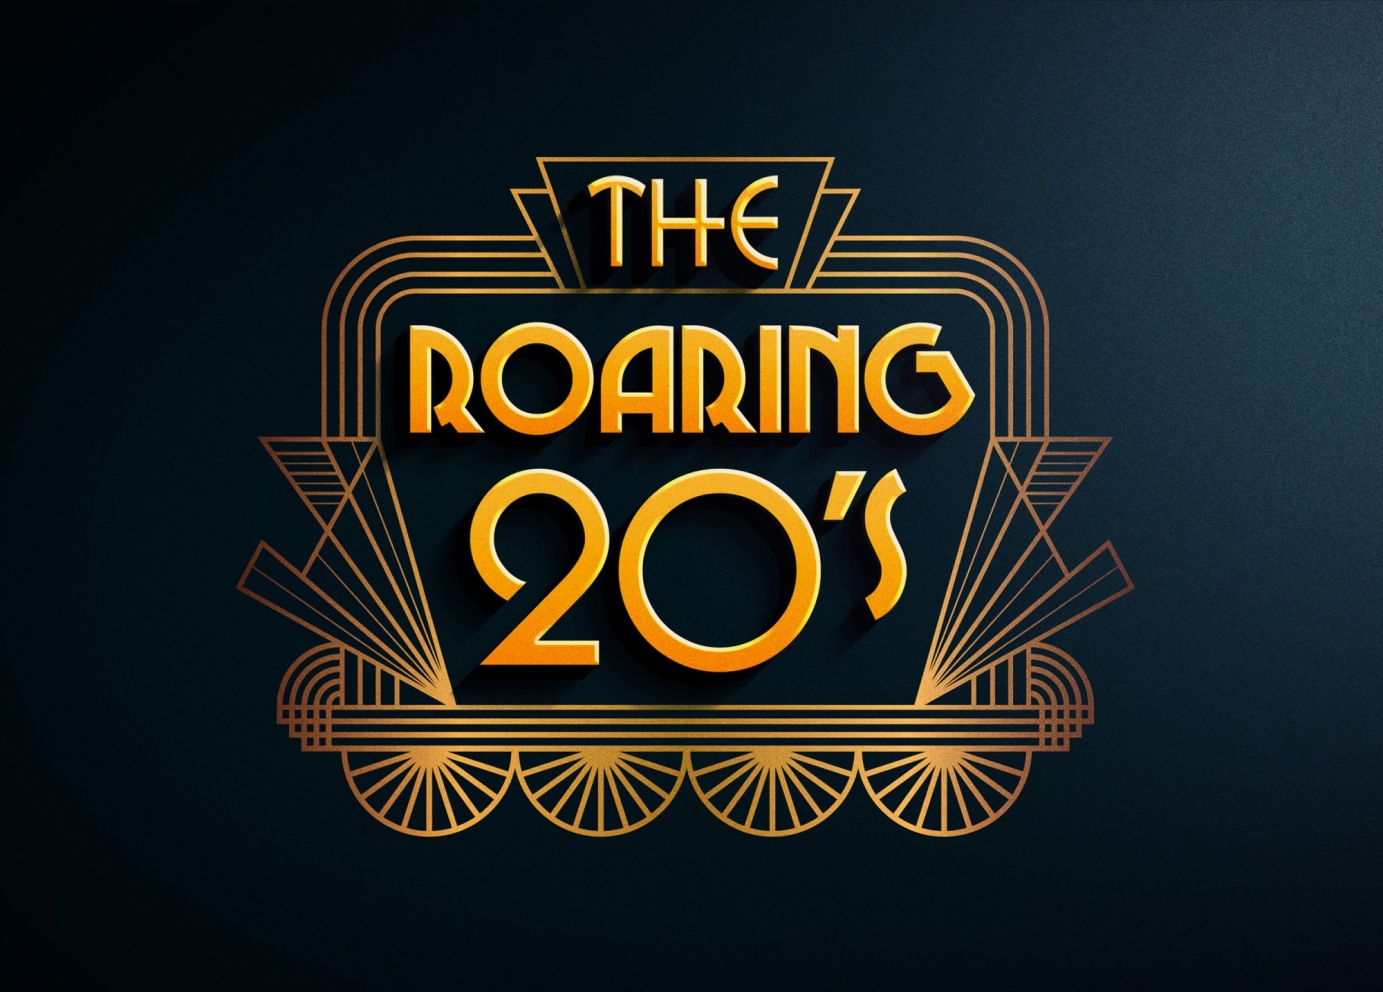 Roaring 20's 1 cc.jpg